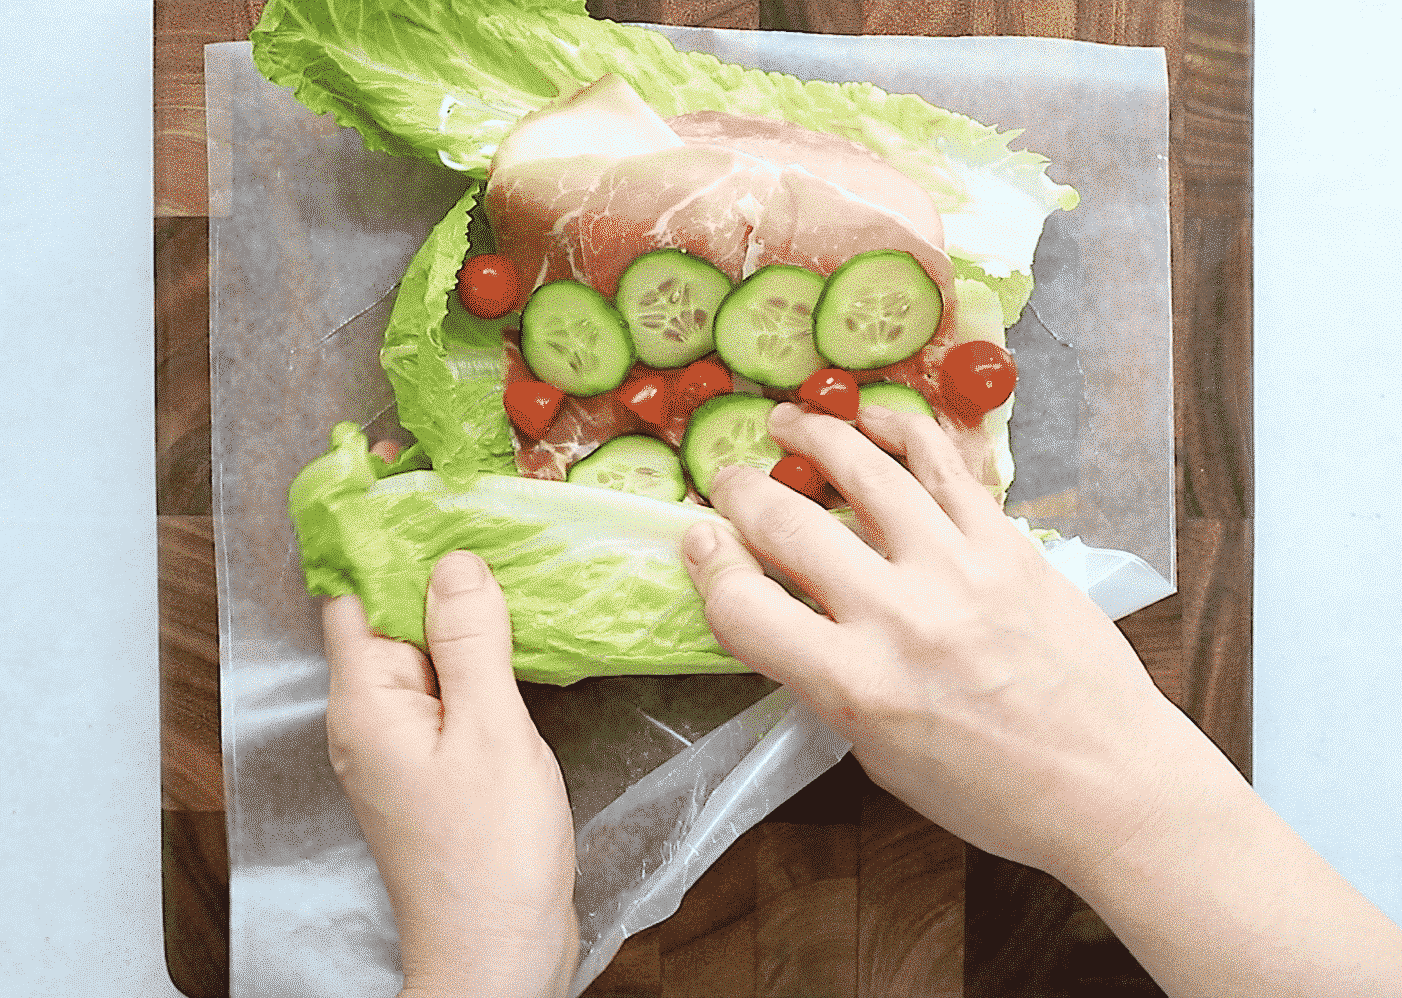 Italian Lettuce Wrap (low carb + keto) - Easy Wrap Recipes